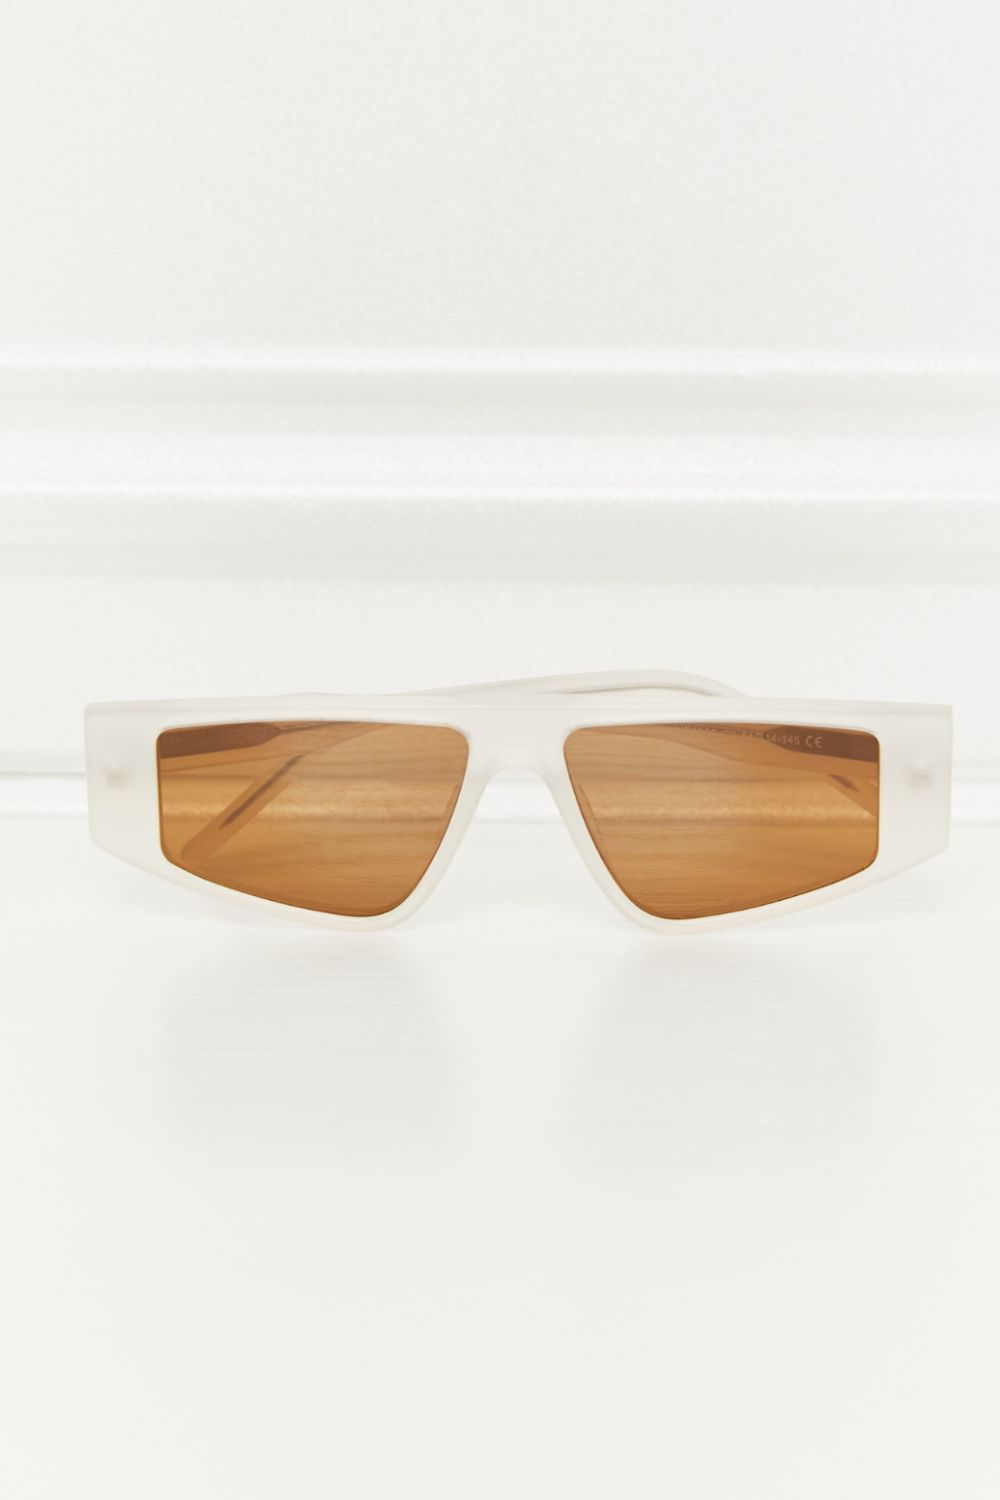 Geometric TAC Polarization Lens Sunglasses Caramel One Size Sunglasses by Vim&Vigor | Vim&Vigor Boutique